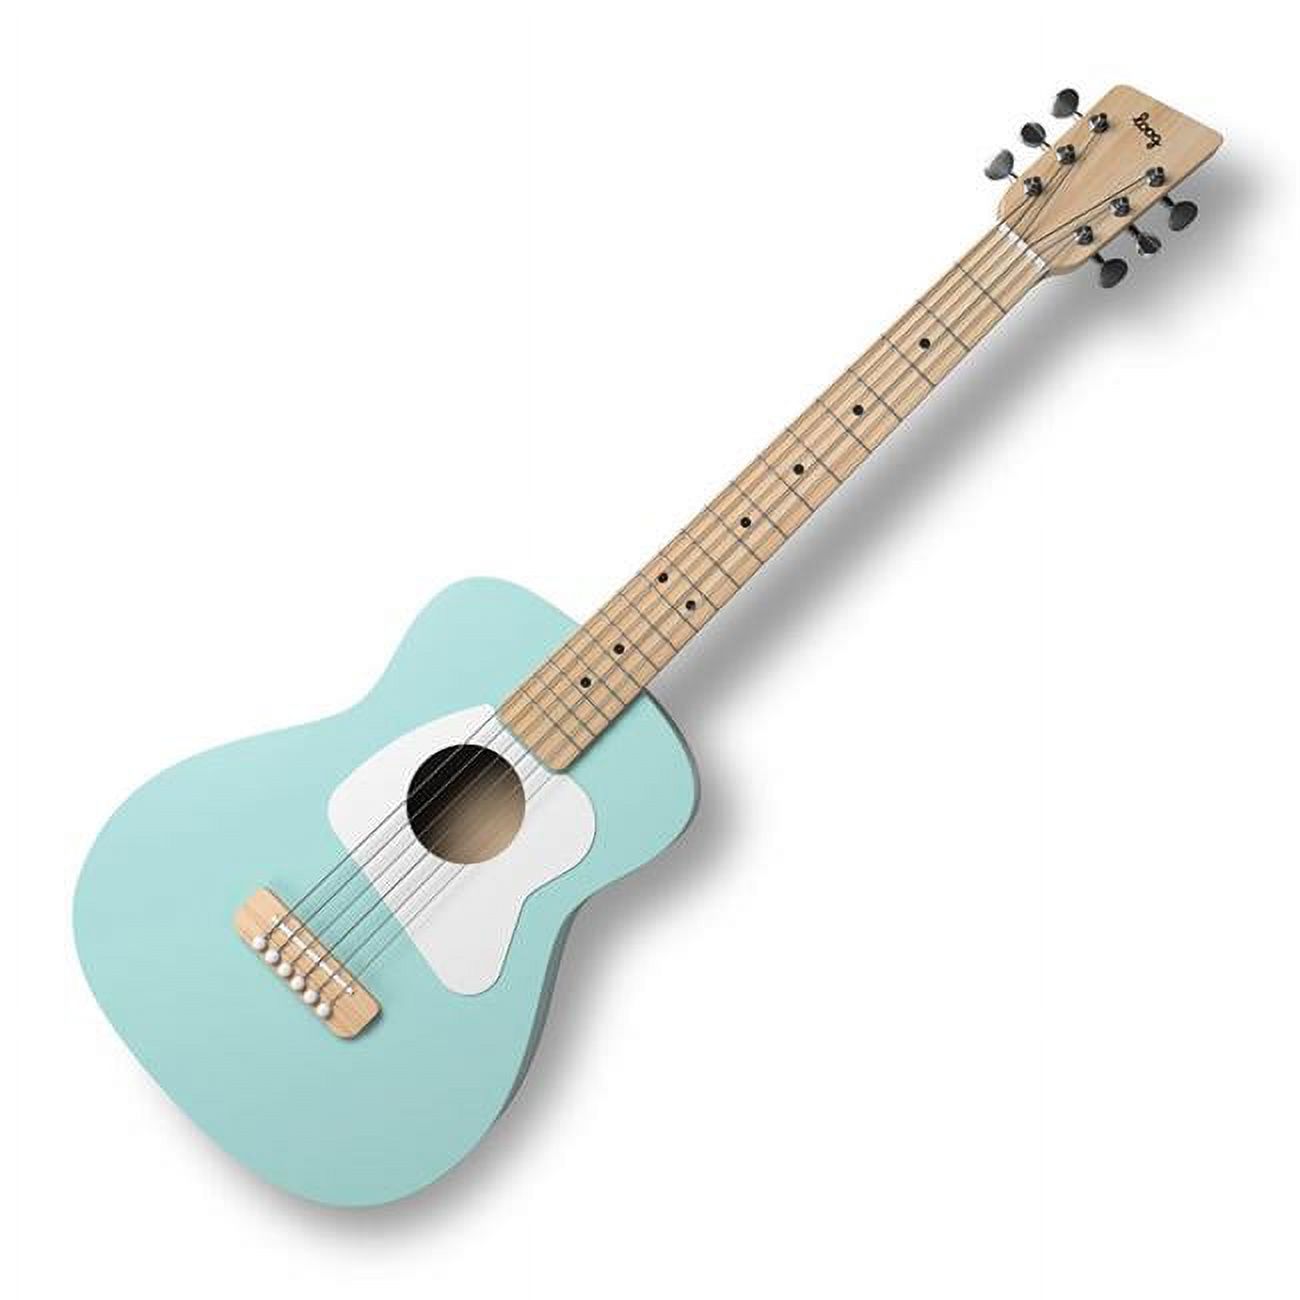 Loog Instruments 329019 Pro VI 6 String Acoustic Guitar, Green - image 1 of 3